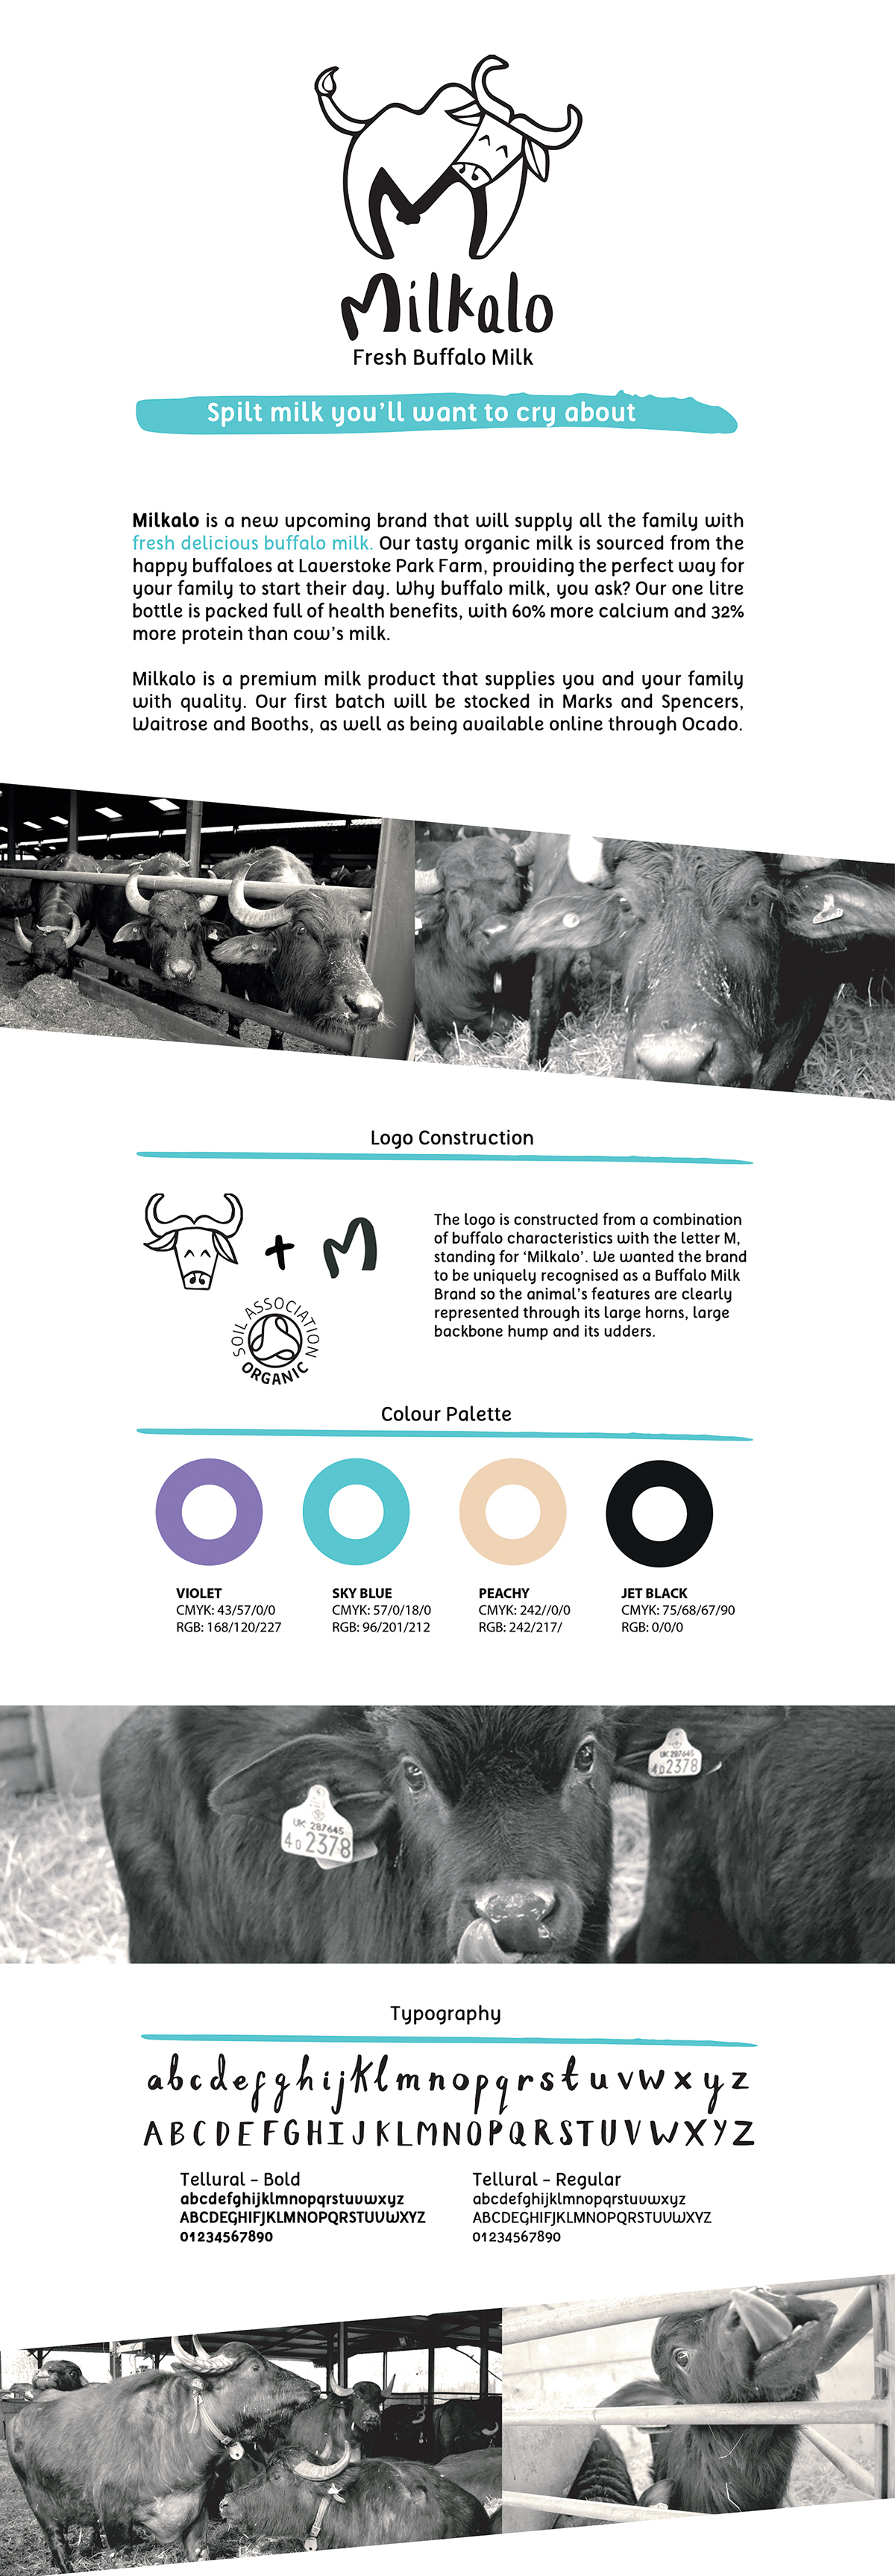 Buffalo milk brand cows farming organic natural product